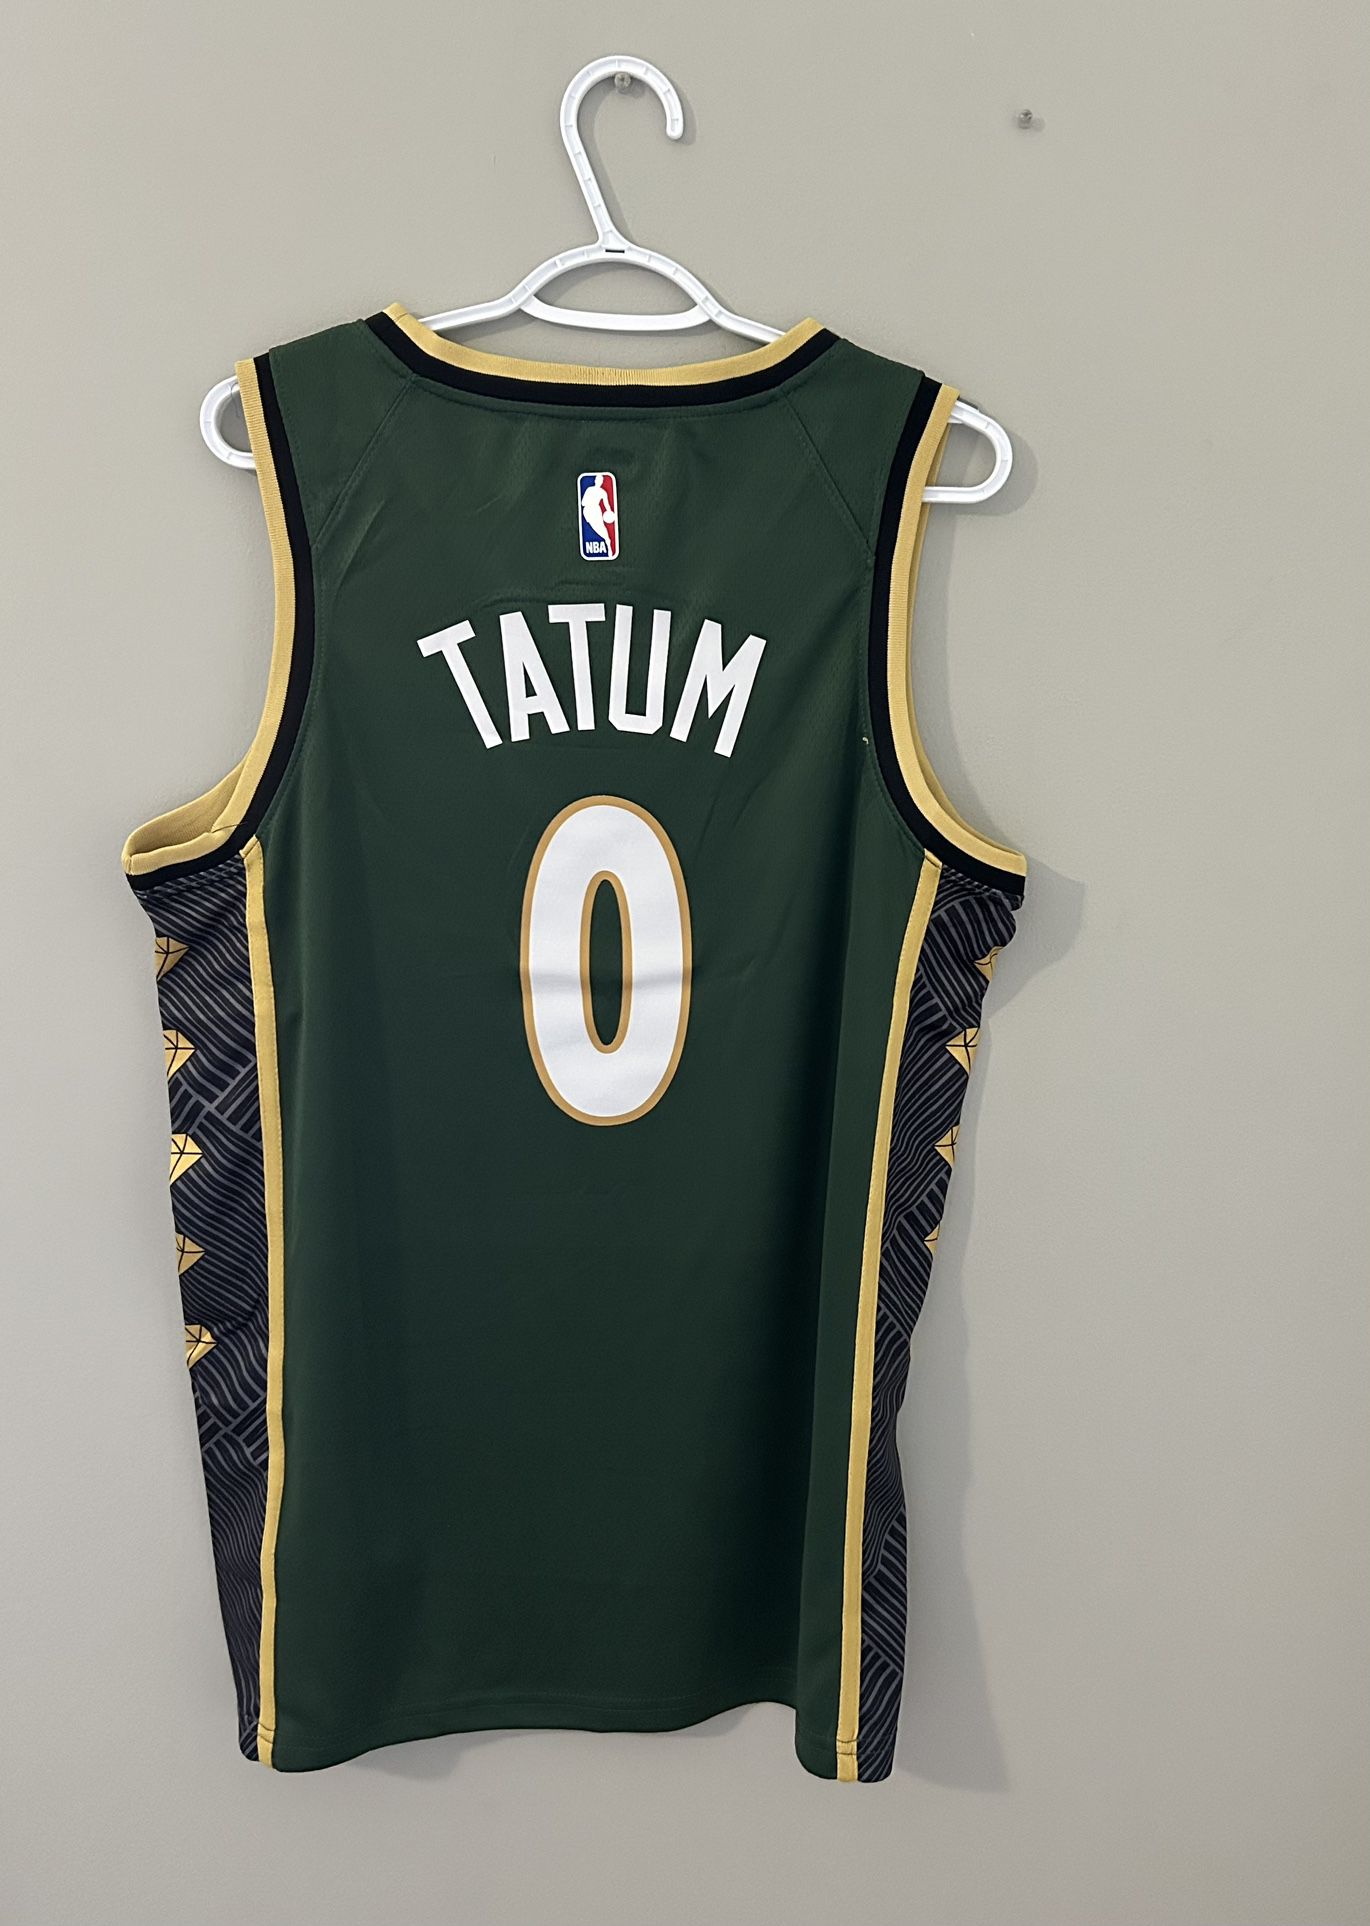 Jayson Tatum All Star Jordan MVP Jersey for Sale in Fort Worth, TX - OfferUp